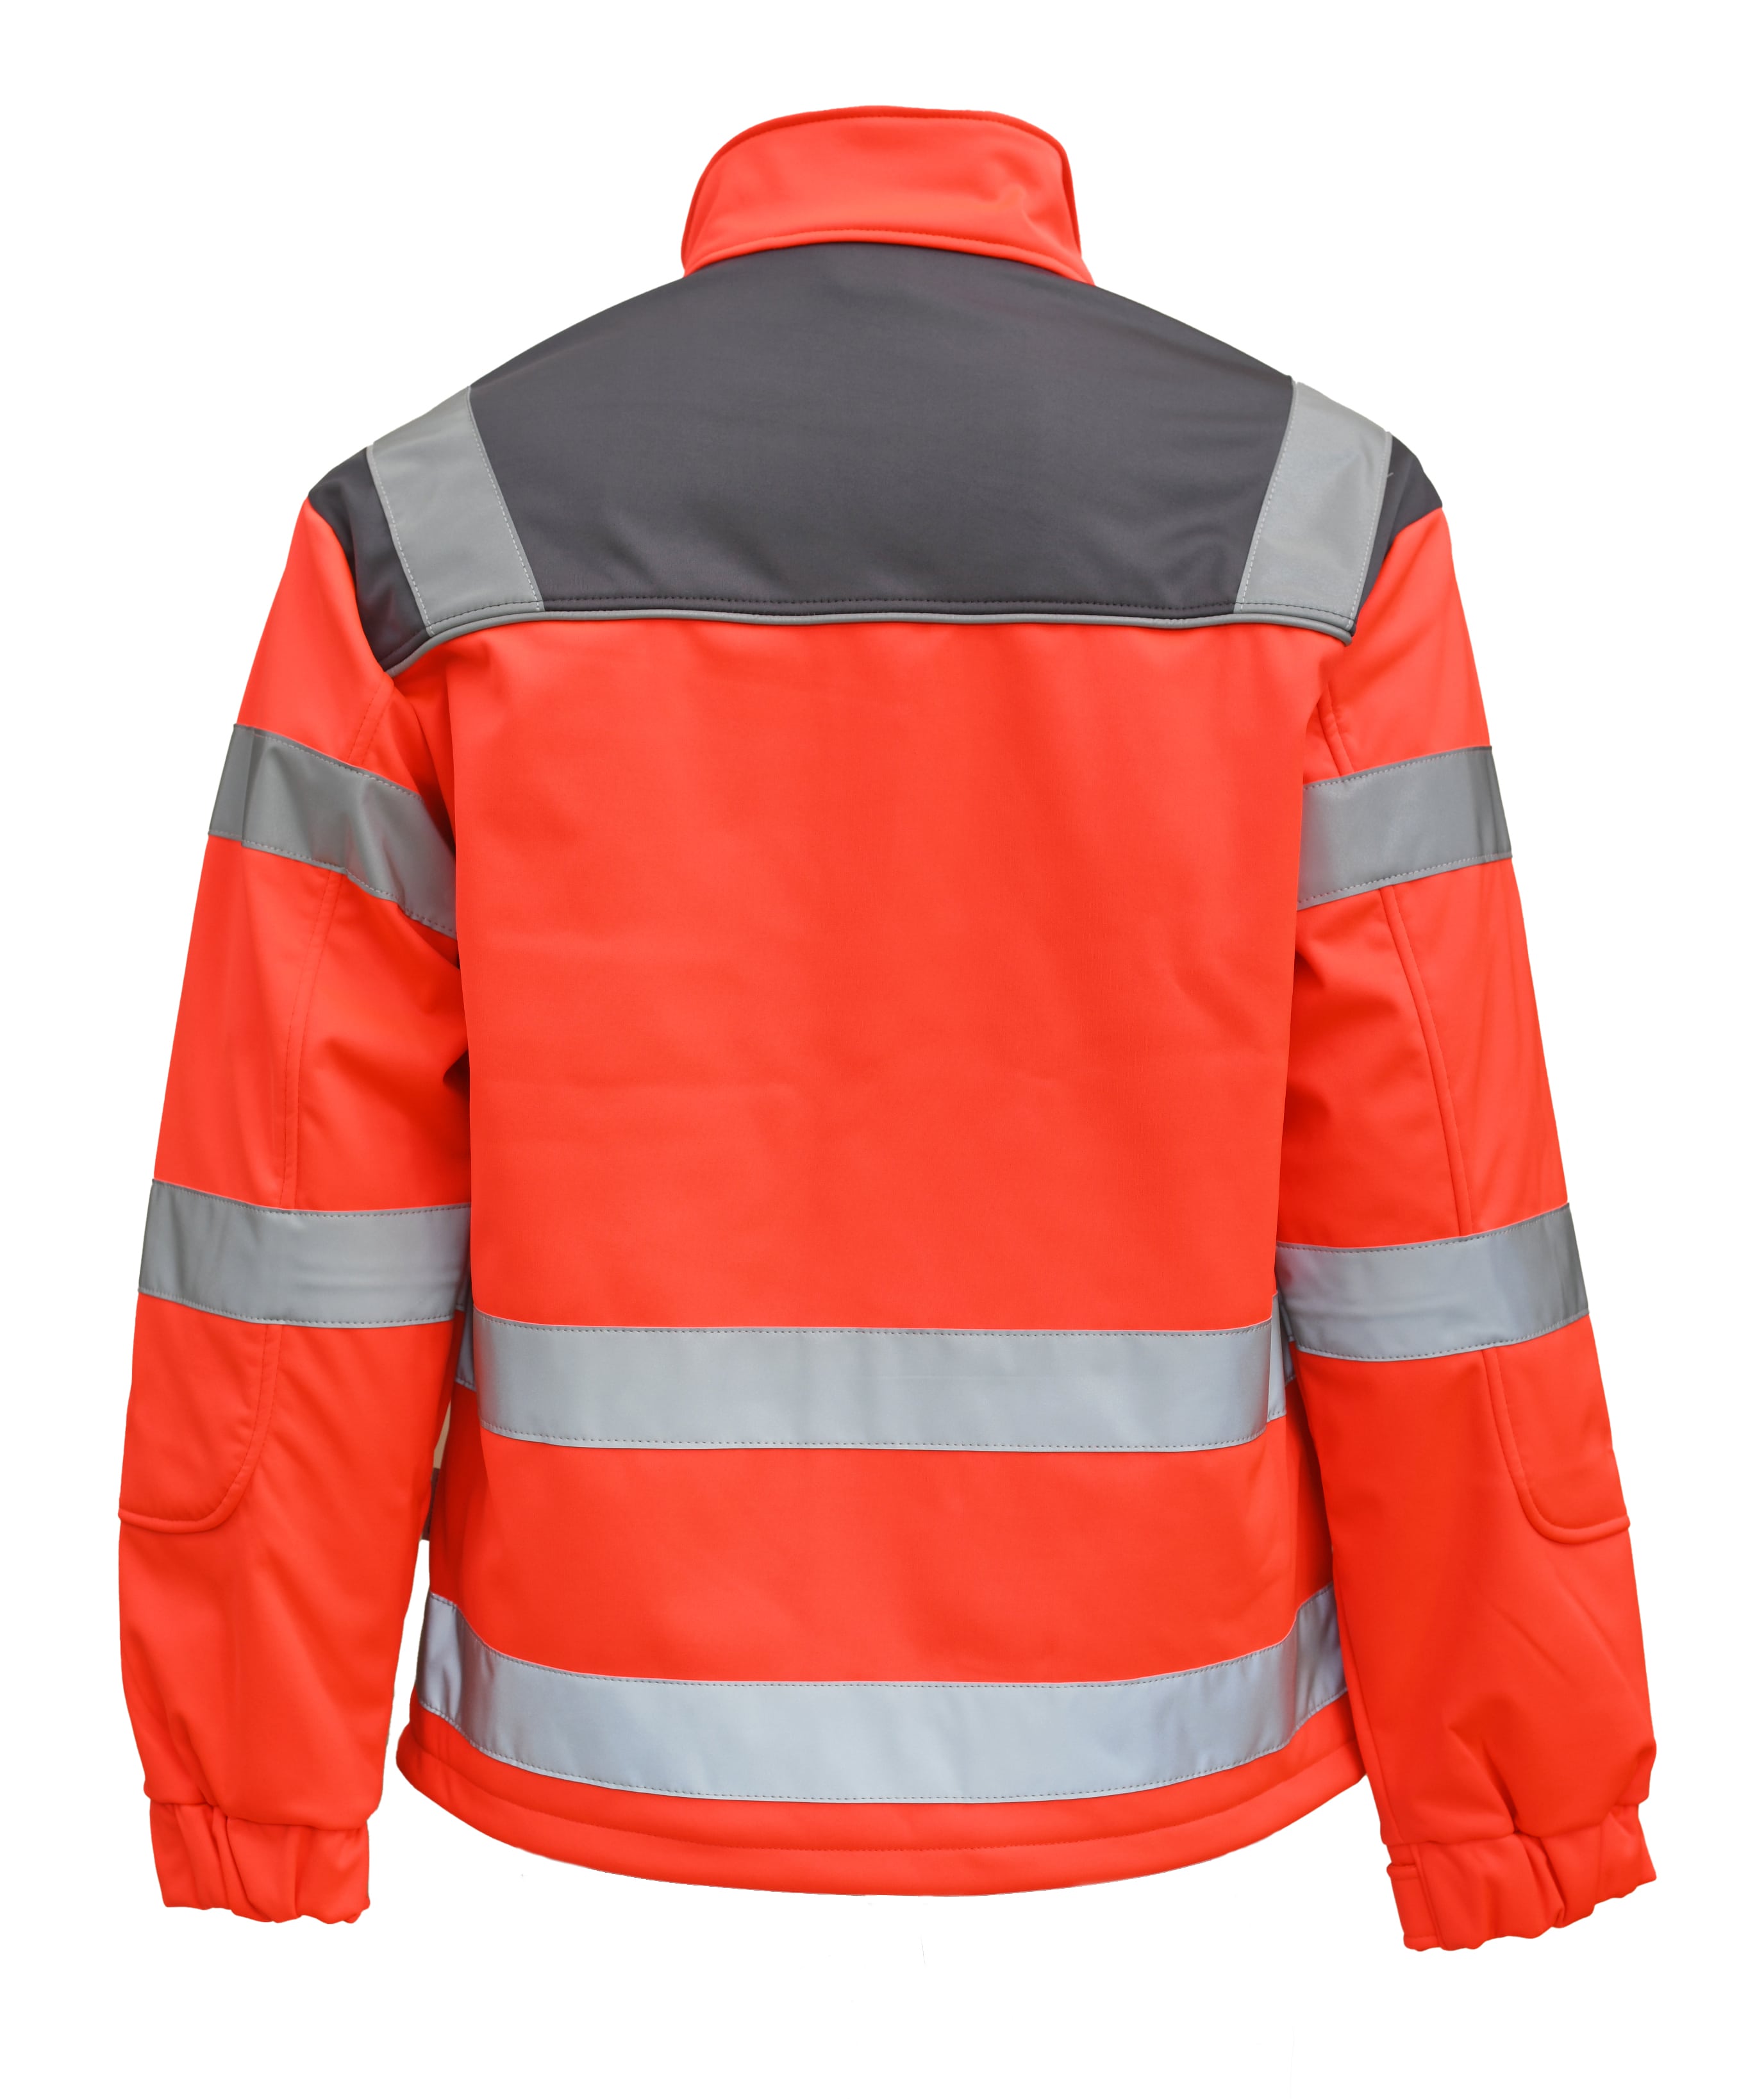 Rescuewear Softshelljacke Dynamic DRK HiVis DRK Neon Rot / Grau (Neu!!) - S